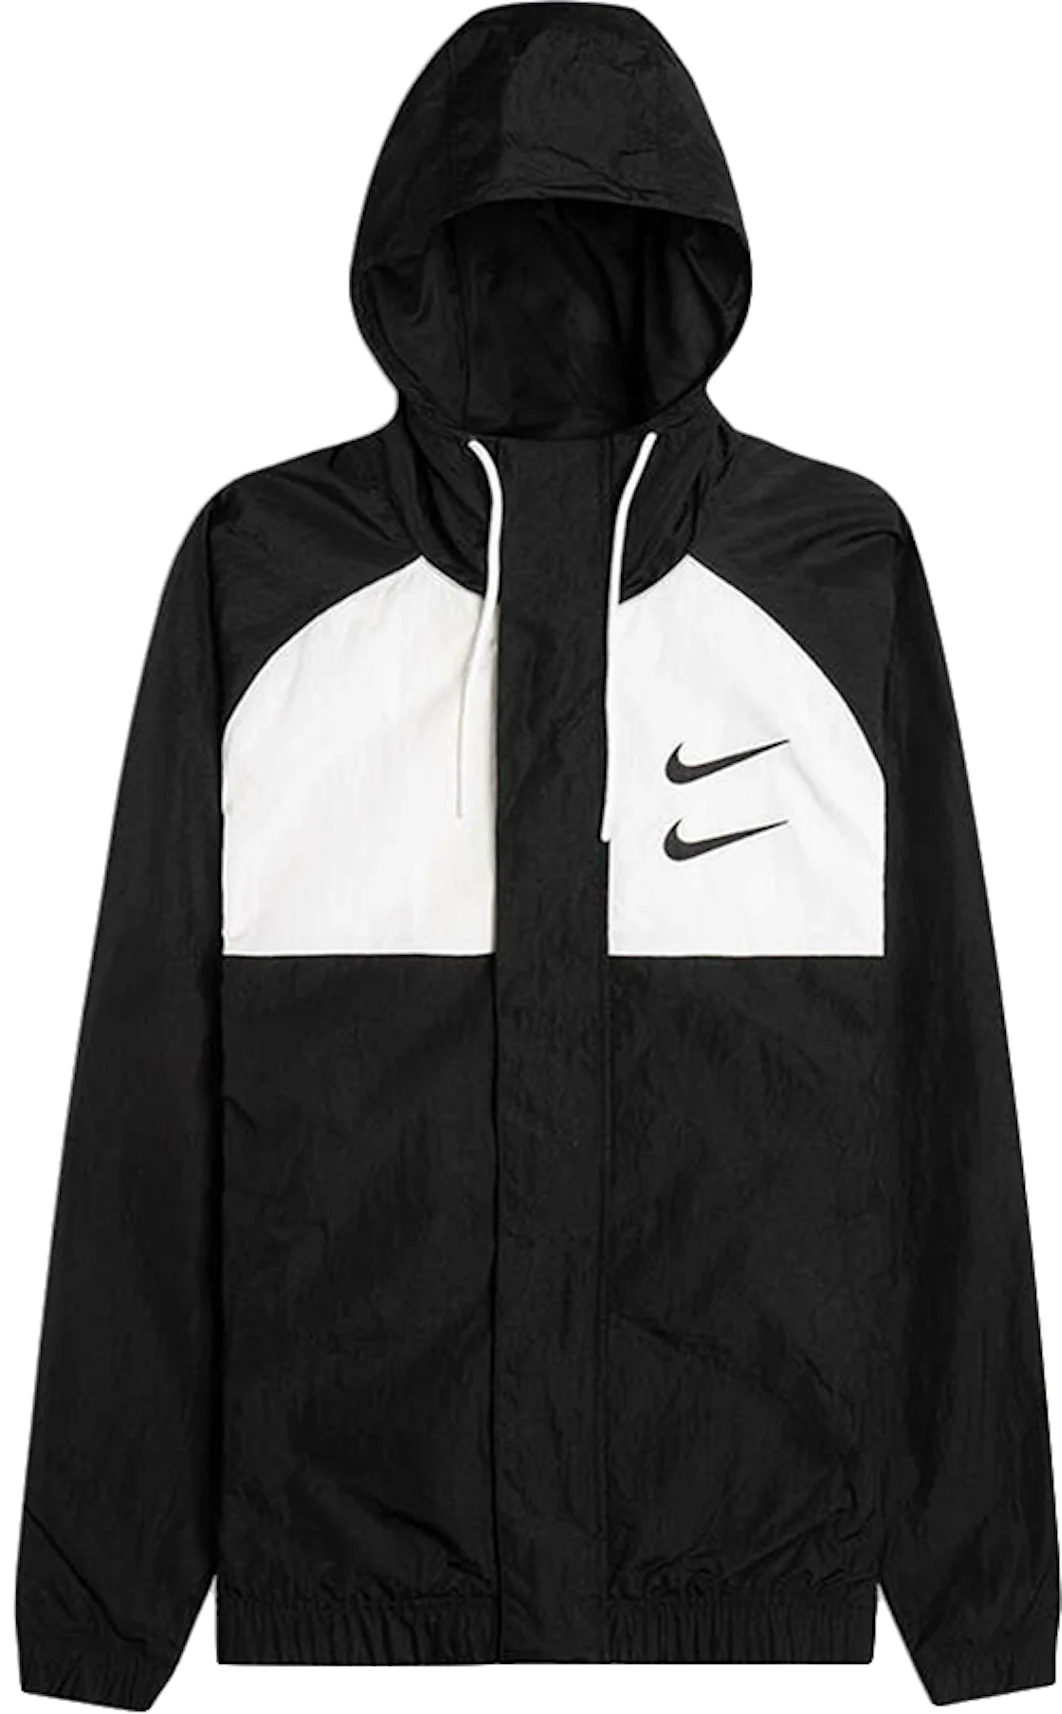 Nike Swoosh HD Woven Jacket Black/White/Particle Grey/Black